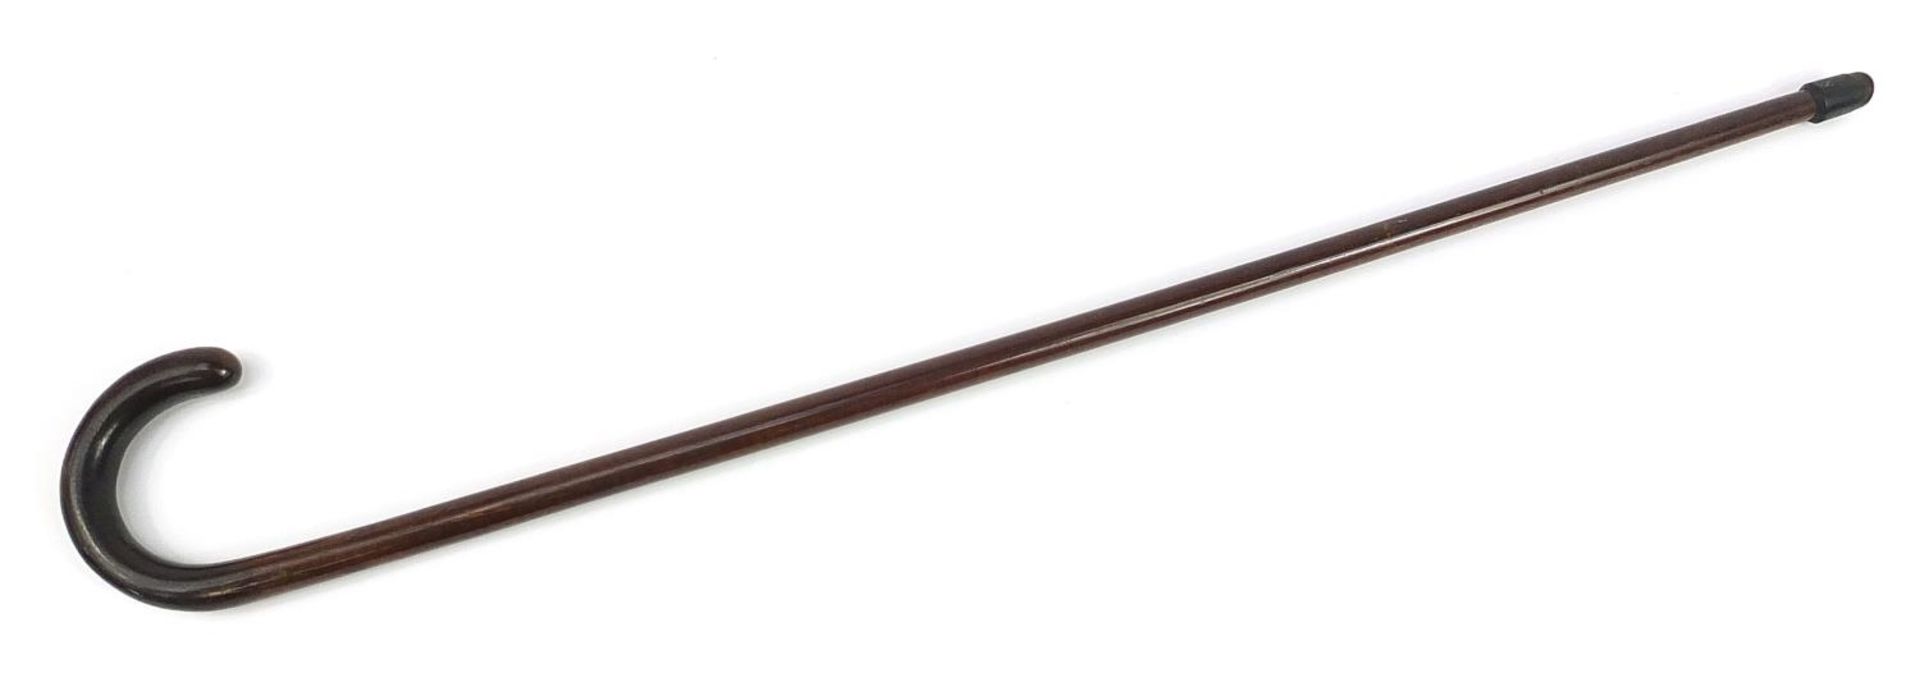 Snakewood walking stick, 91cm in length - Image 3 of 3